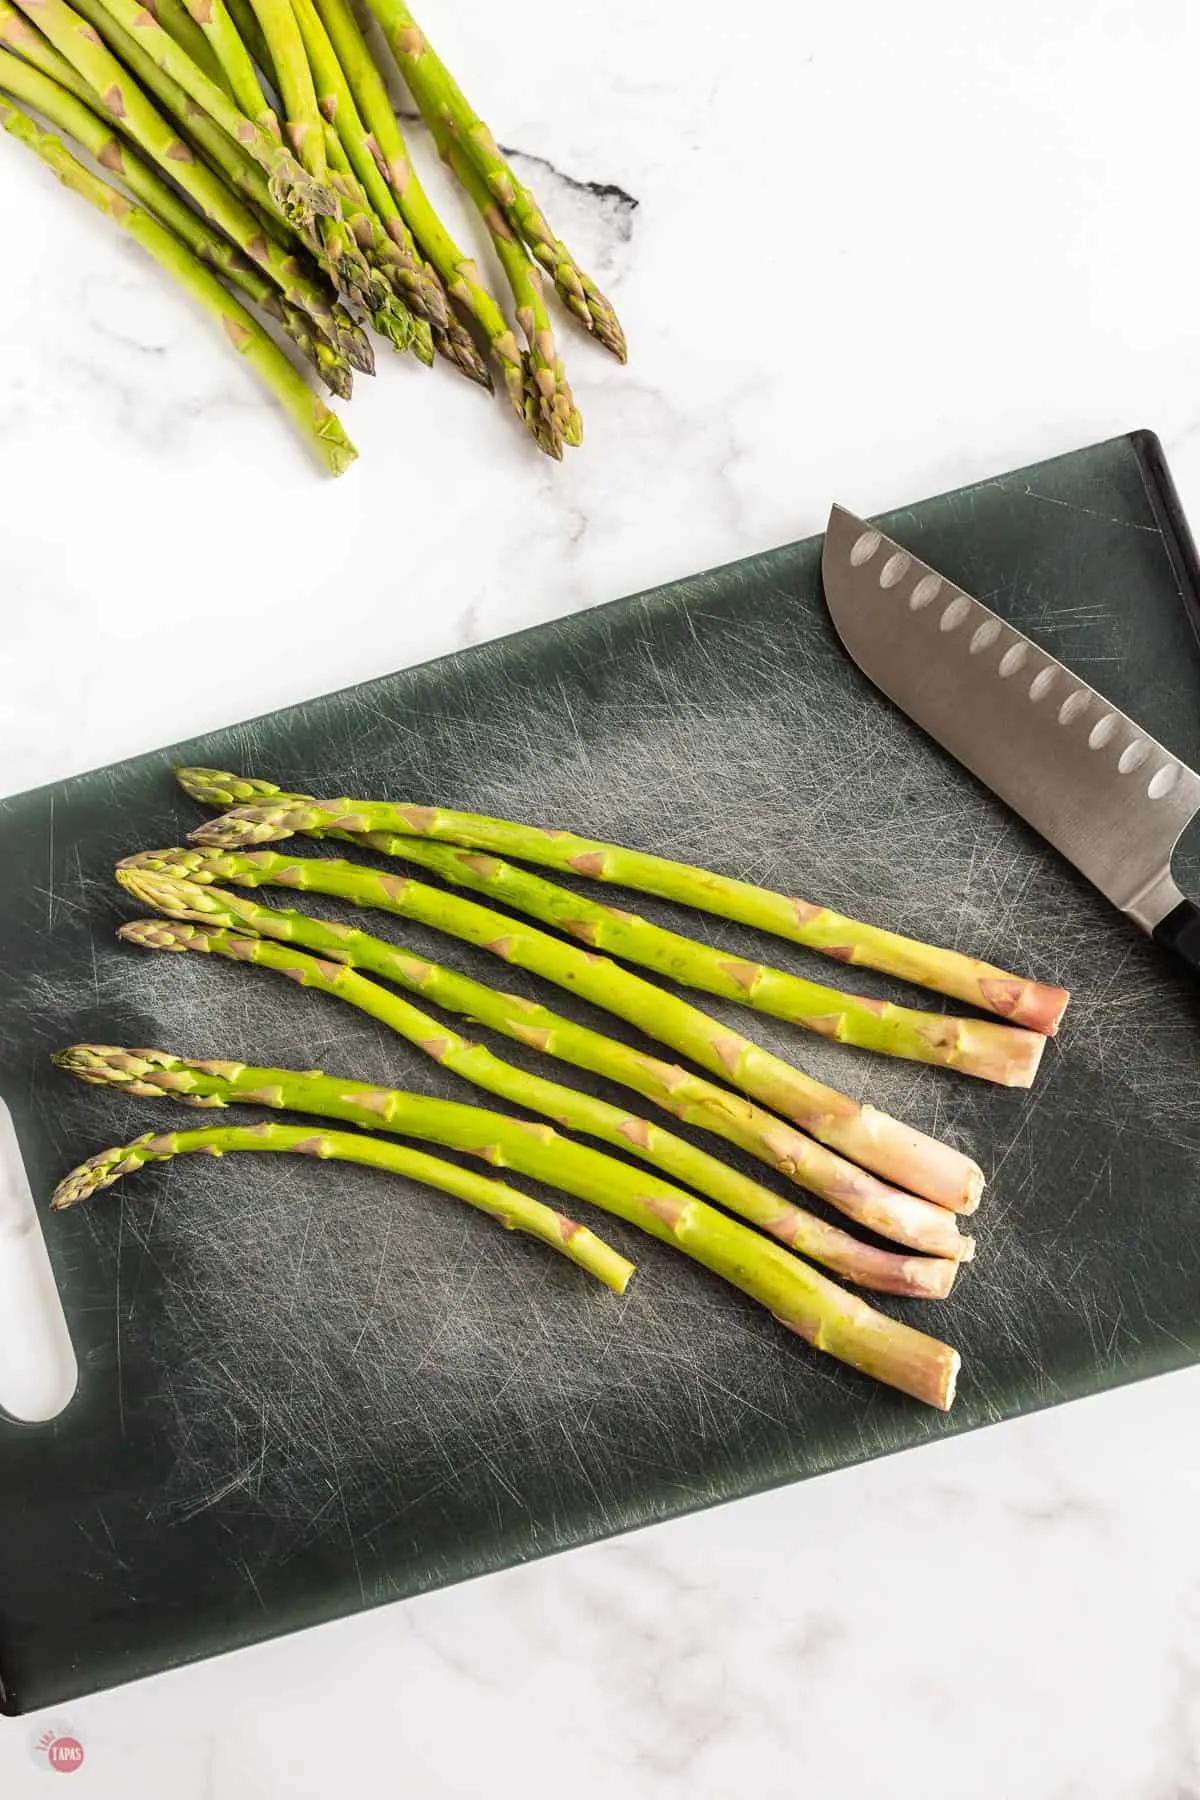 asparagus stalks on a cutting board